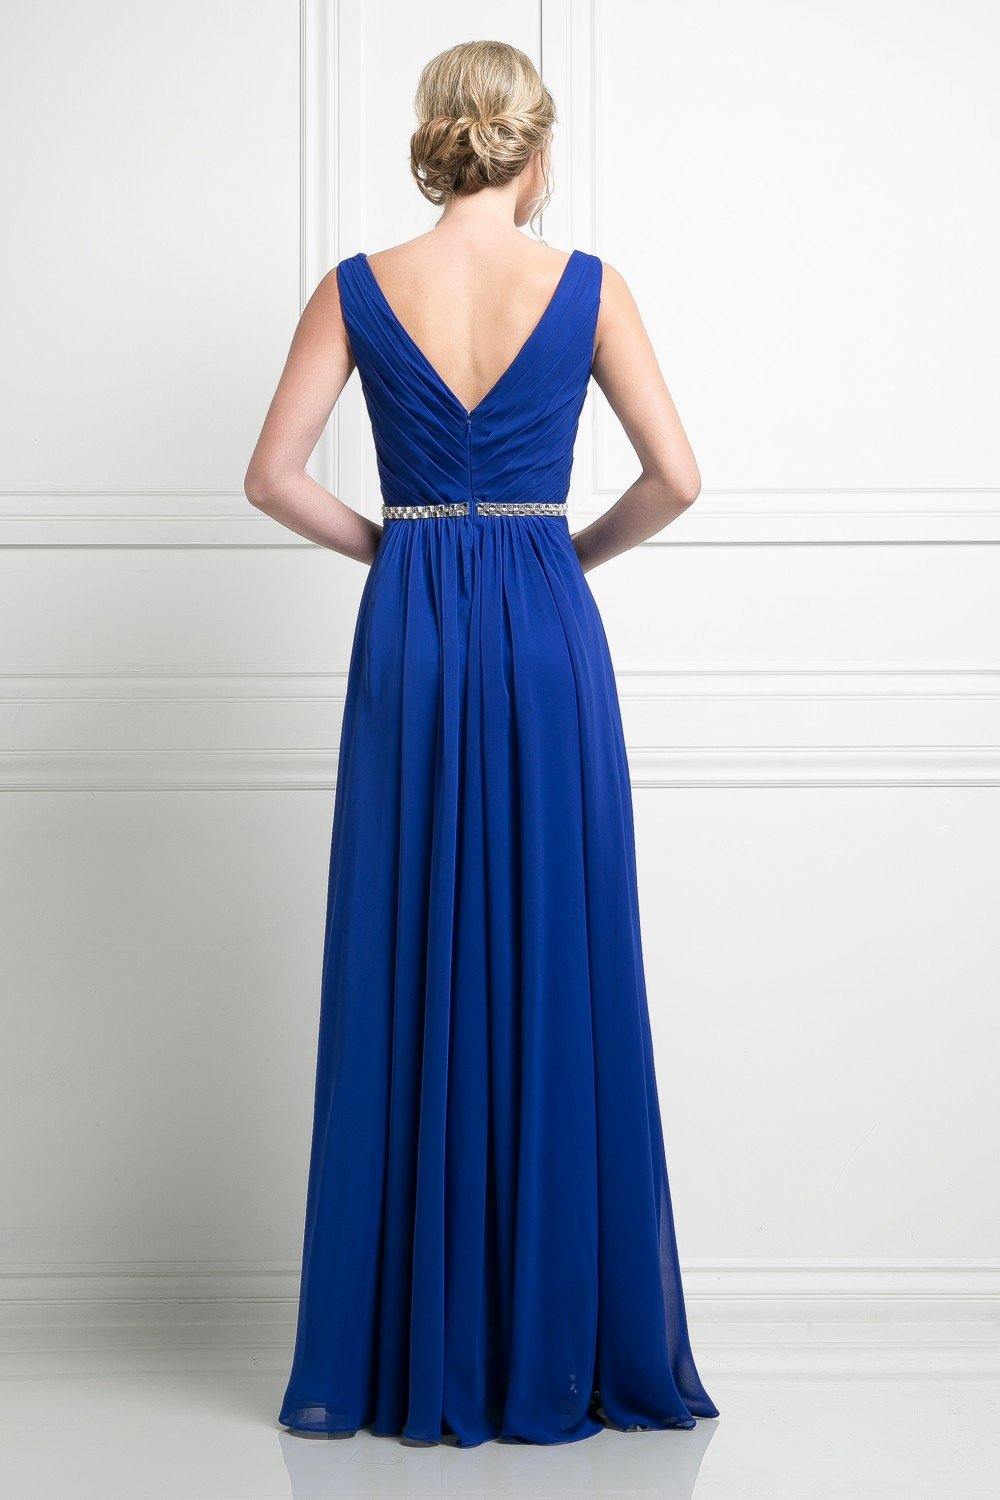 Aqua Cinderella Divine W0014 Formal Long Dress Bridesmaid for $39.99 ...